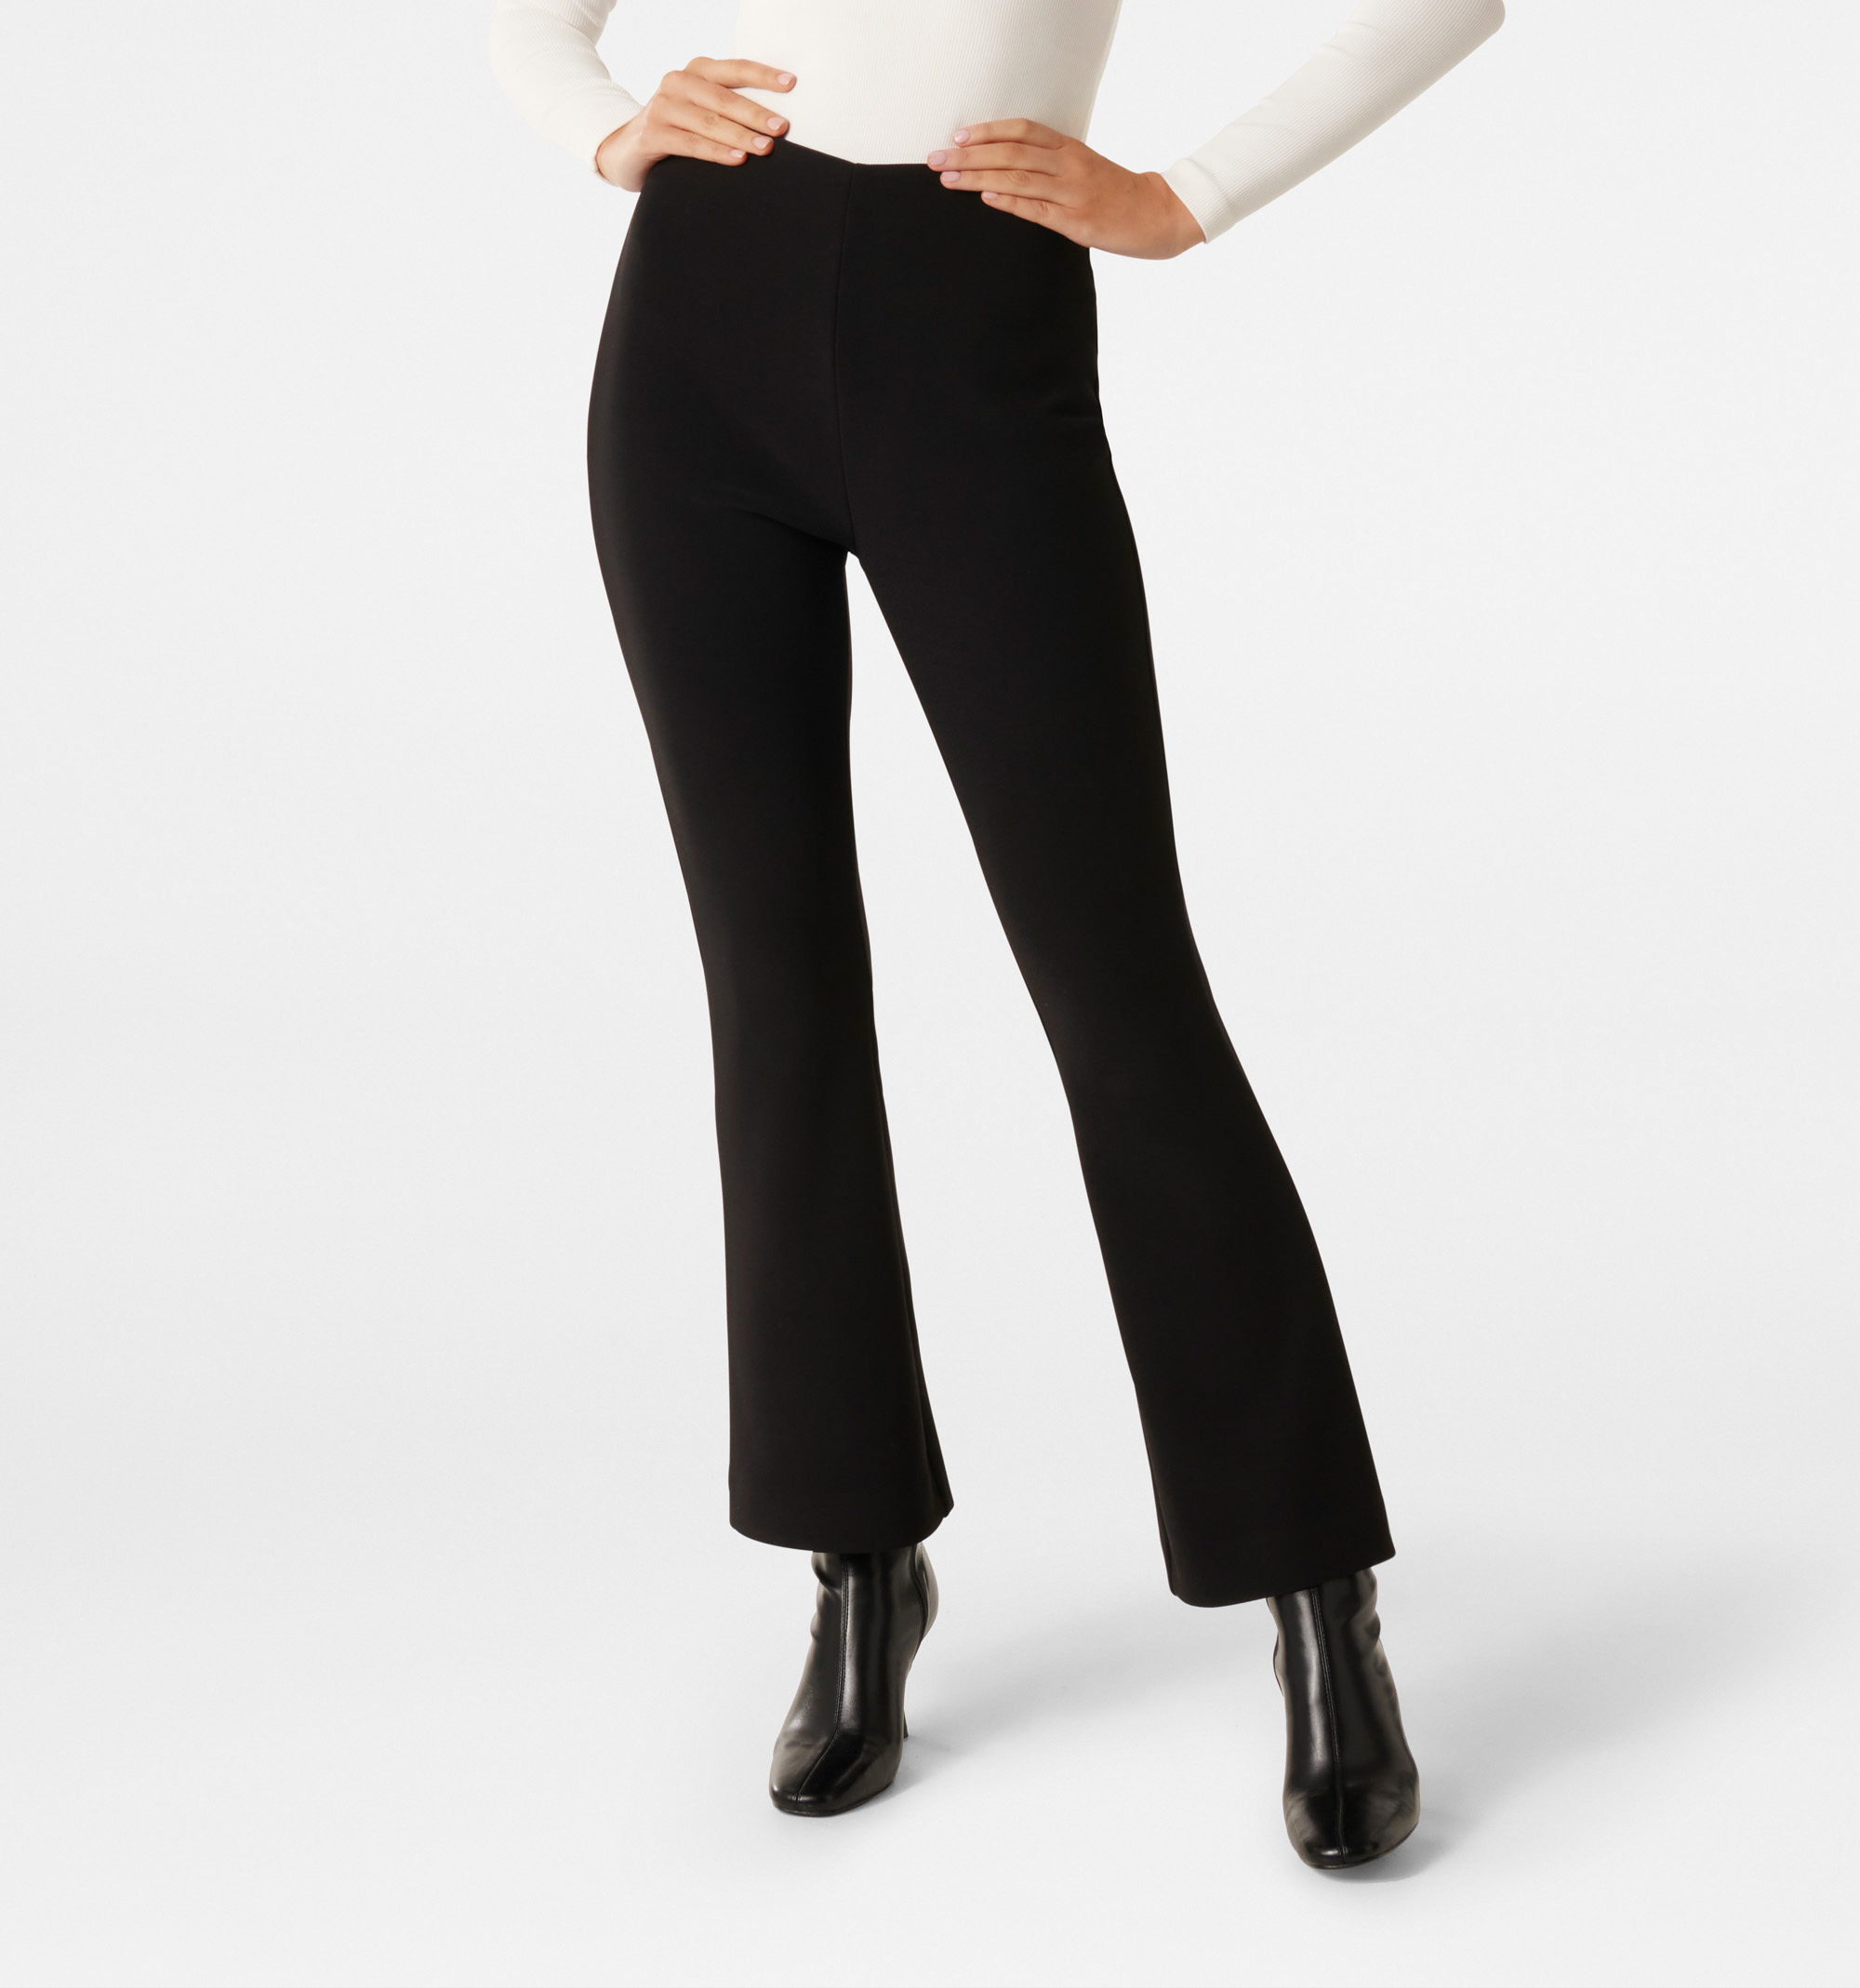 Pull On Embellished Tuxedo Trim Flare Pants | White House Black Market-hanic.com.vn